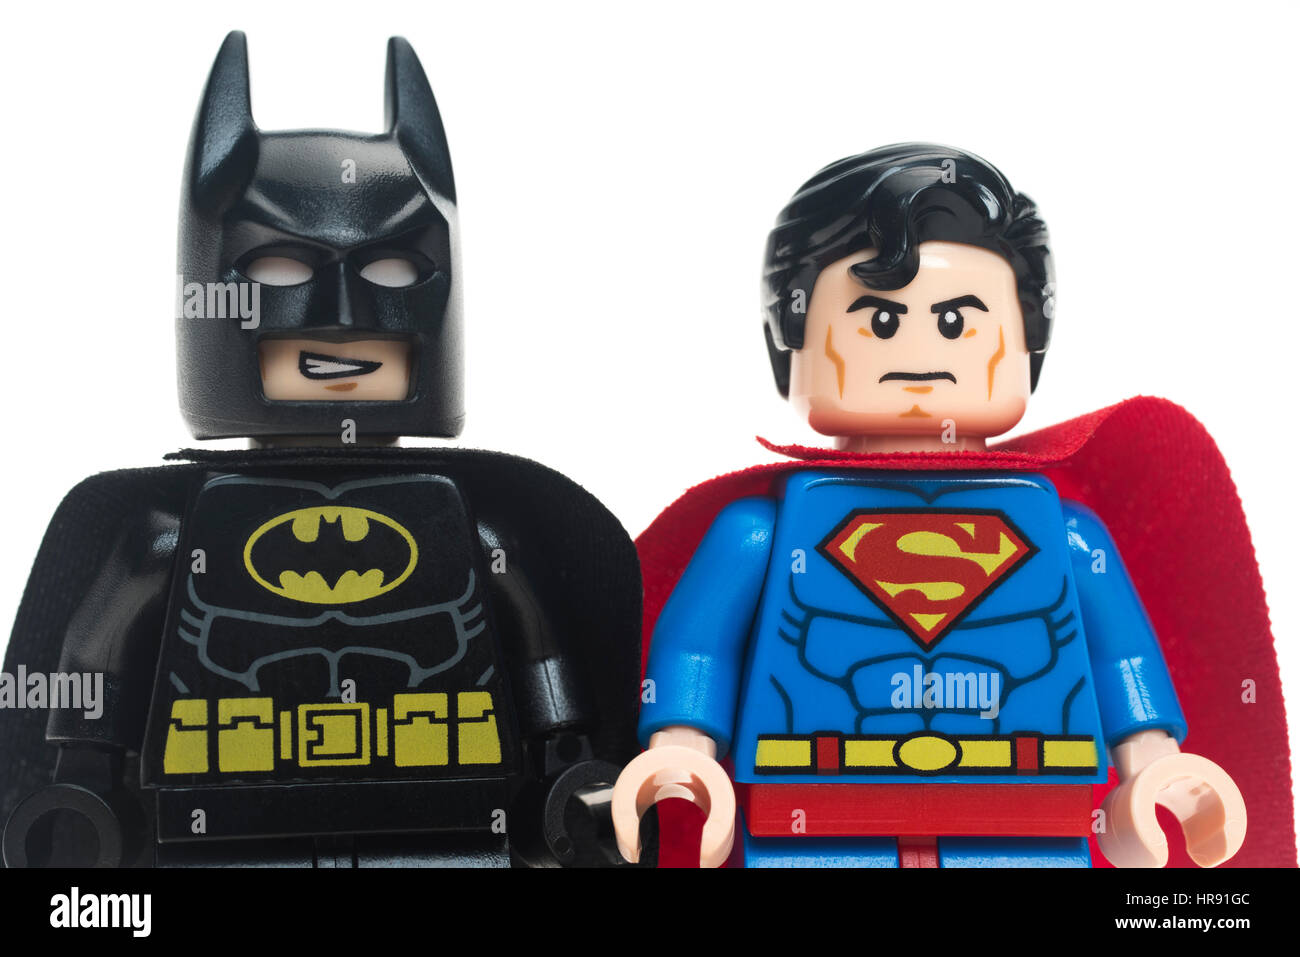 Lego Batman and Superman Minifigure Stock Photo - Alamy